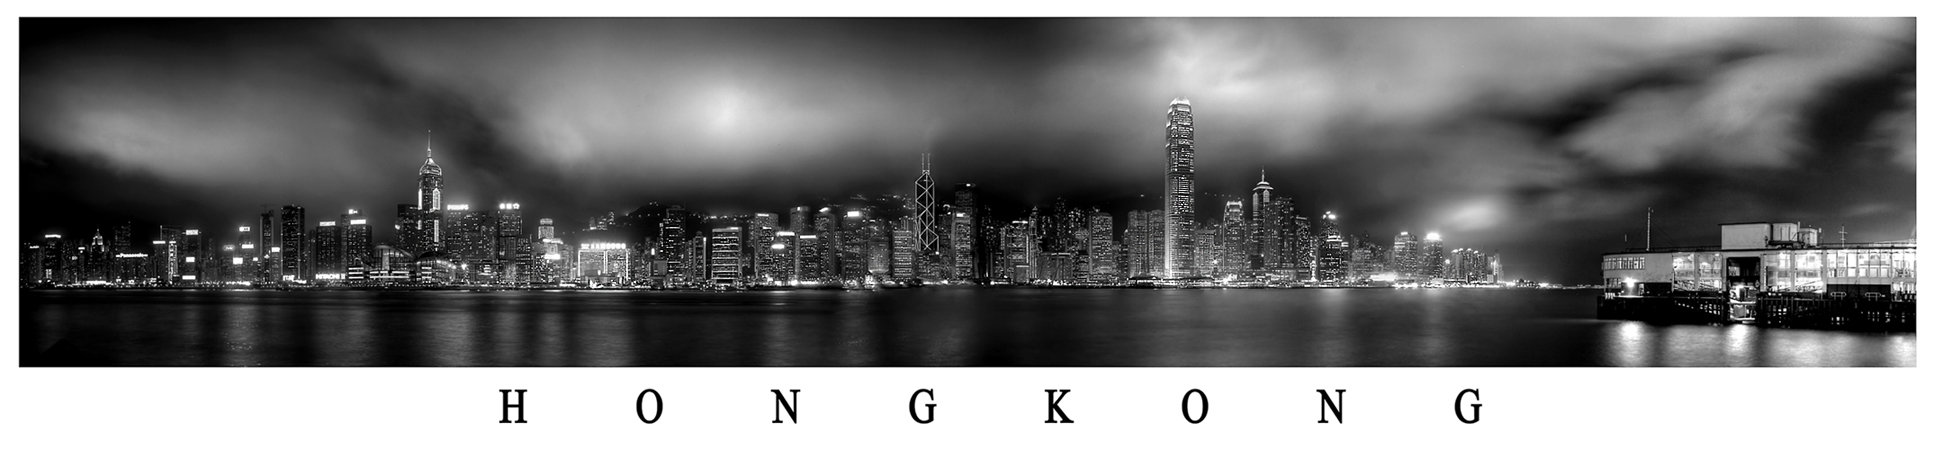 Hong Kong - Skyline (reload)